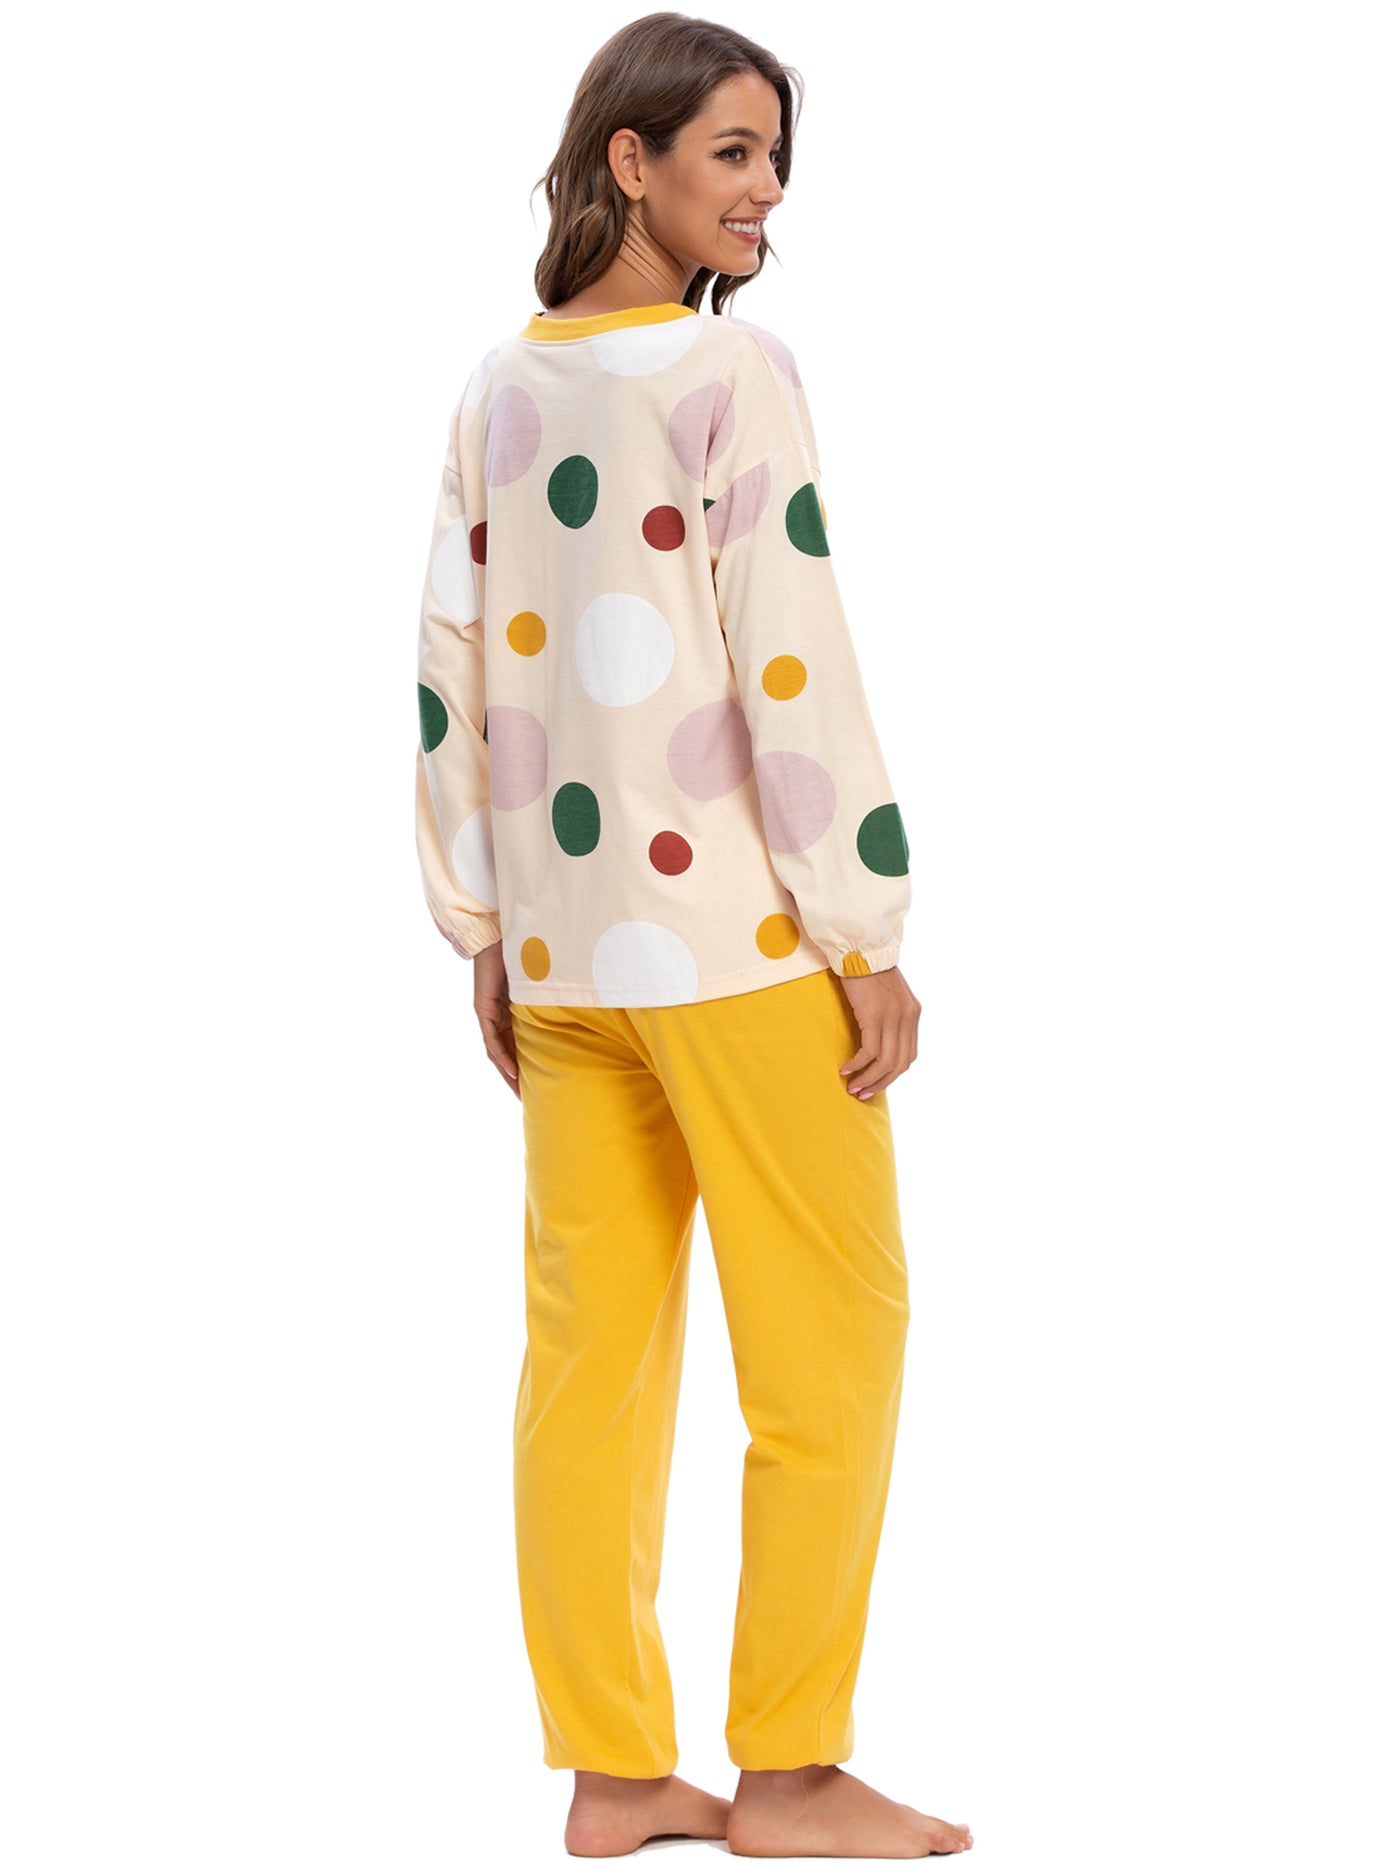 Bublédon Sleepwear Long Sleeve Tops and Pants Soft Loungewear Pajama Set